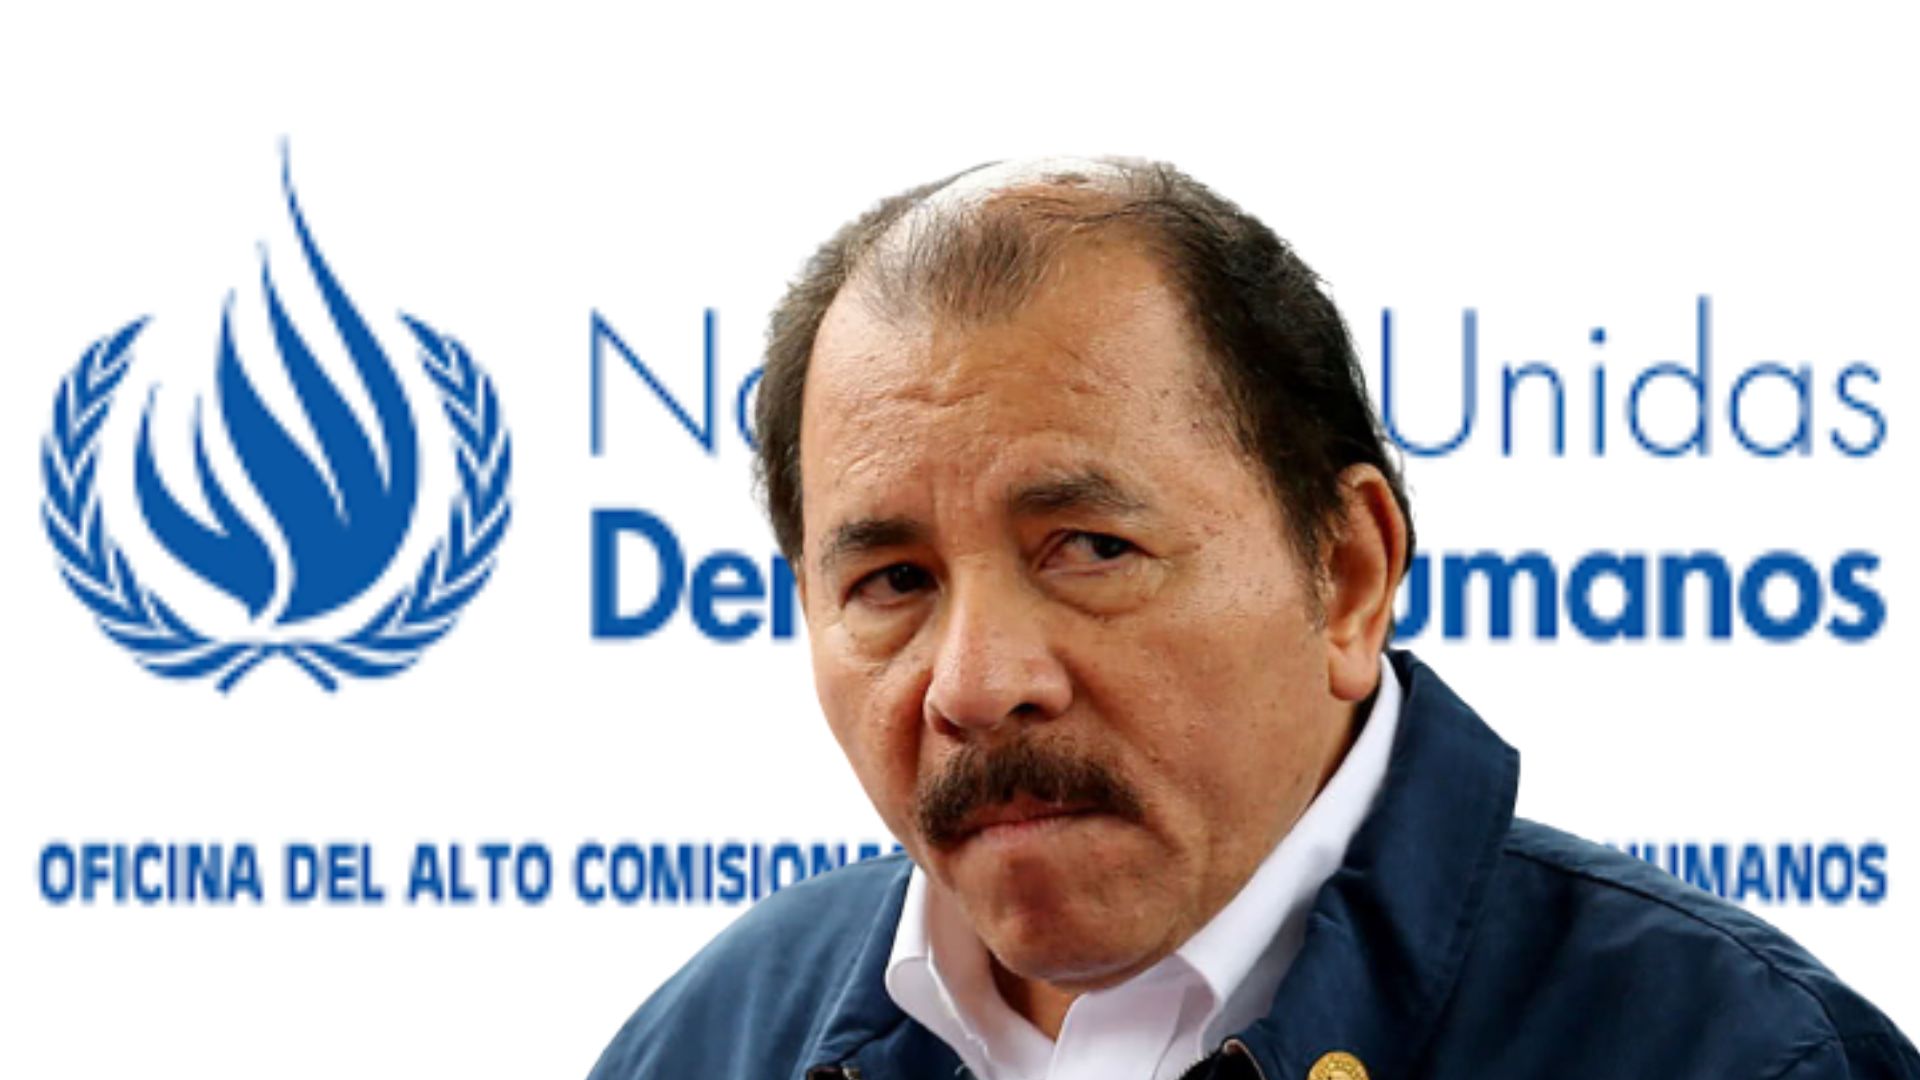 Human Rights Defenders in Nicaragua applaud UN report against Ortega